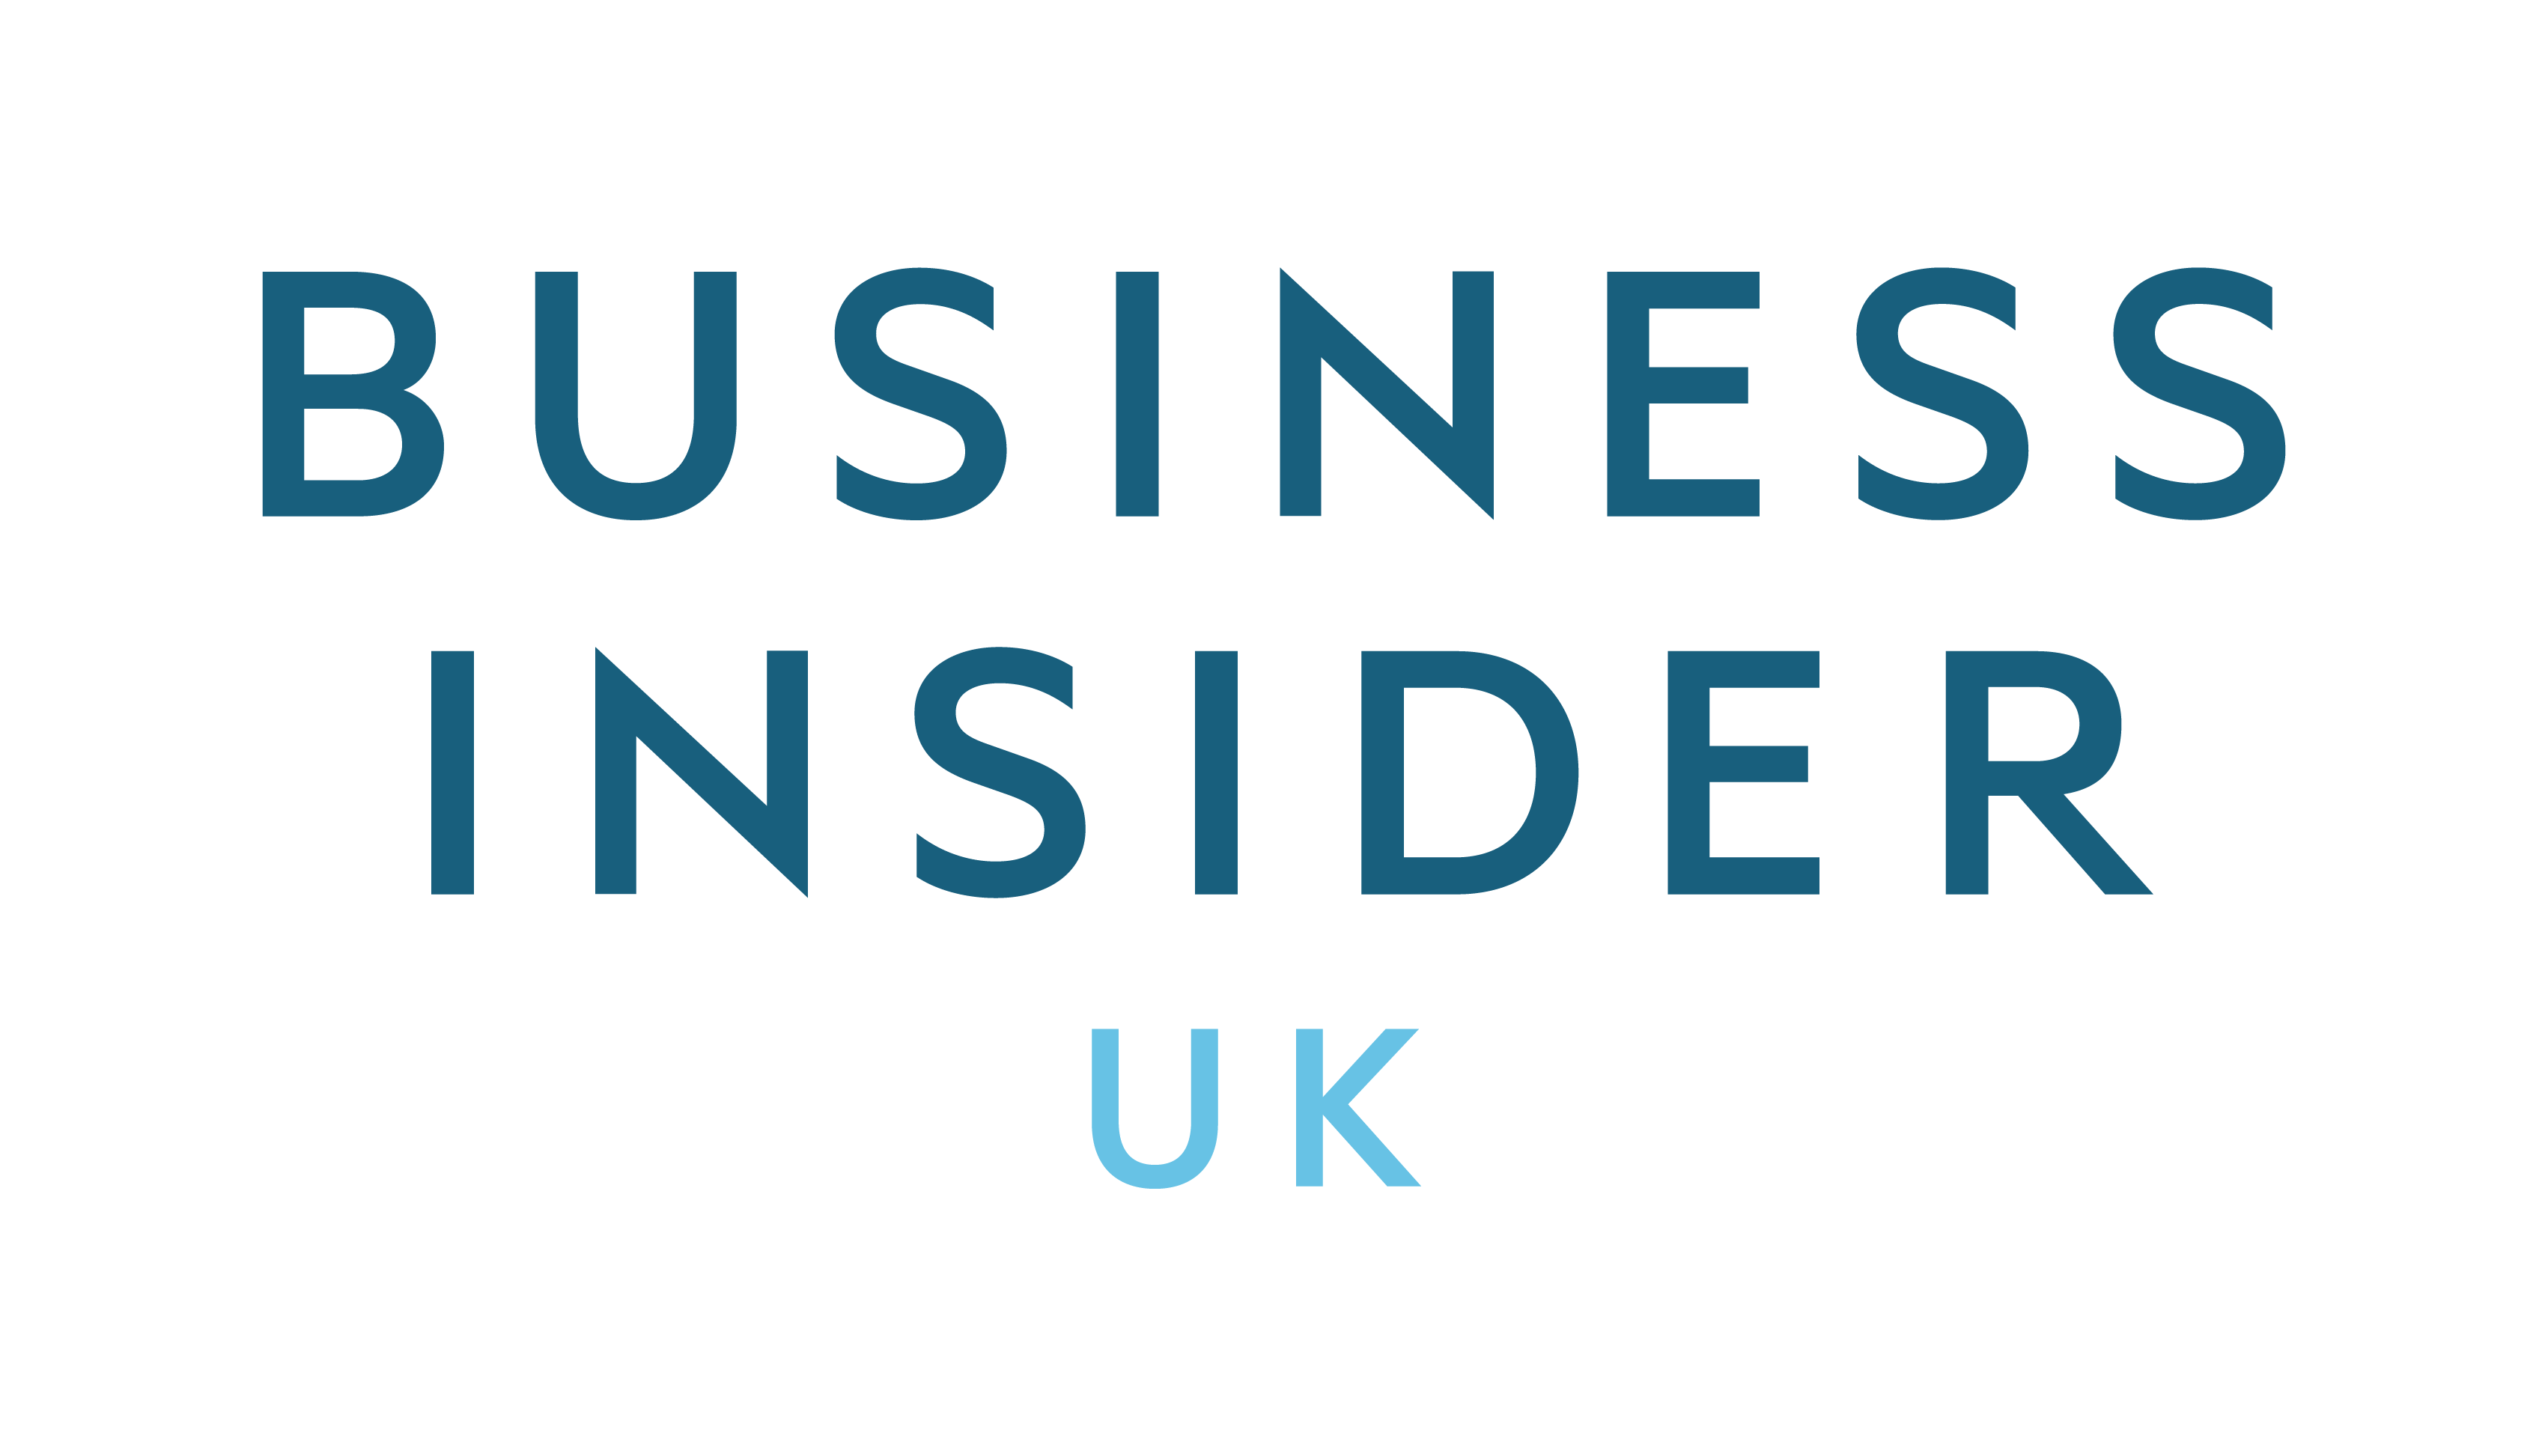 Thisisinsider Logo - Business Insider Logos - Business Insider